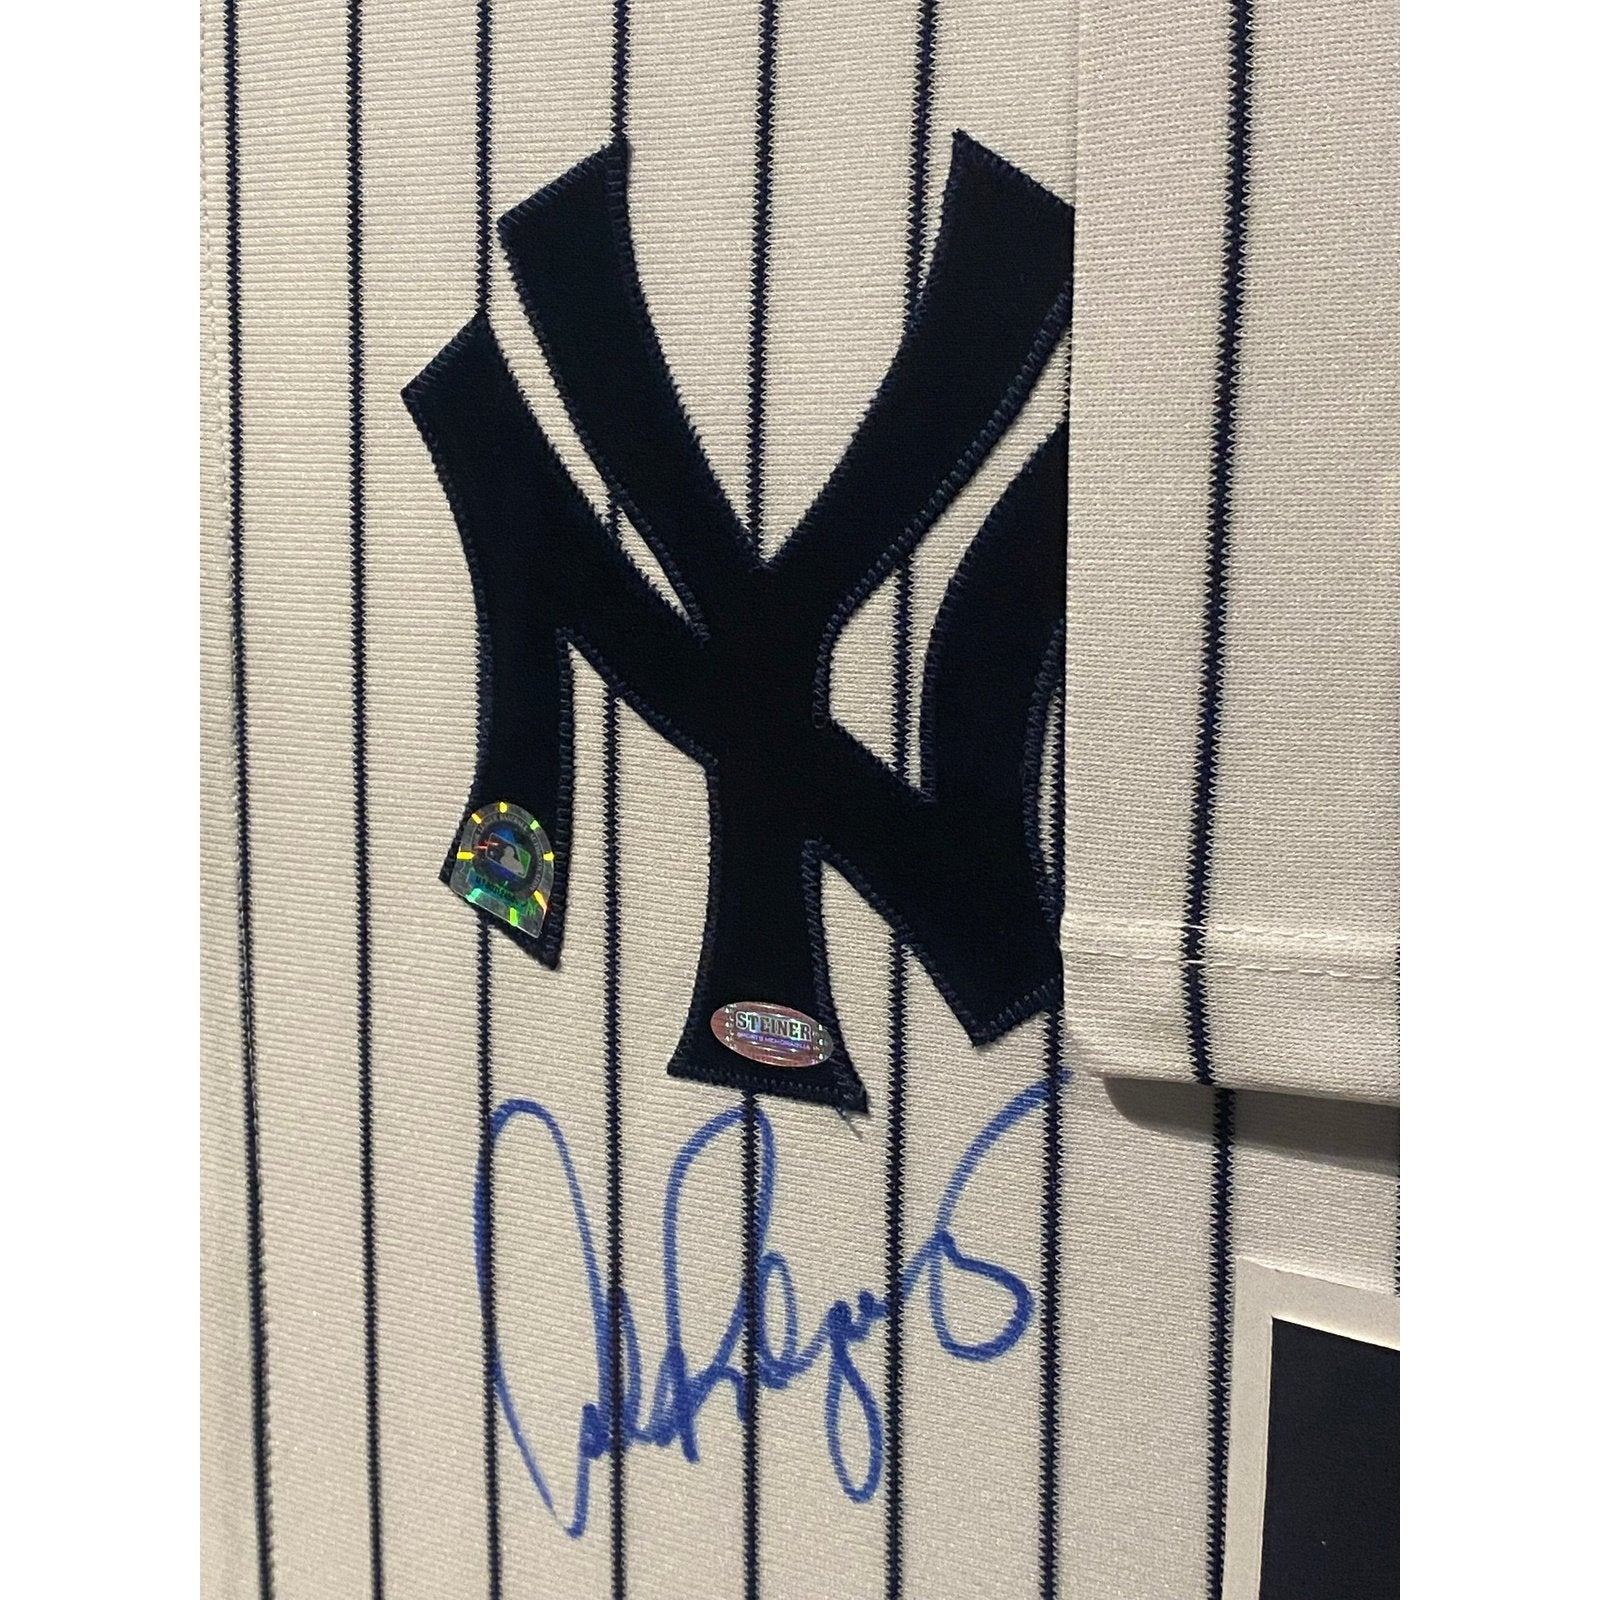 Derek Jeter Autographed Pinstriped Yankees Jersey PSA & Photo (PSA and  Steiner)